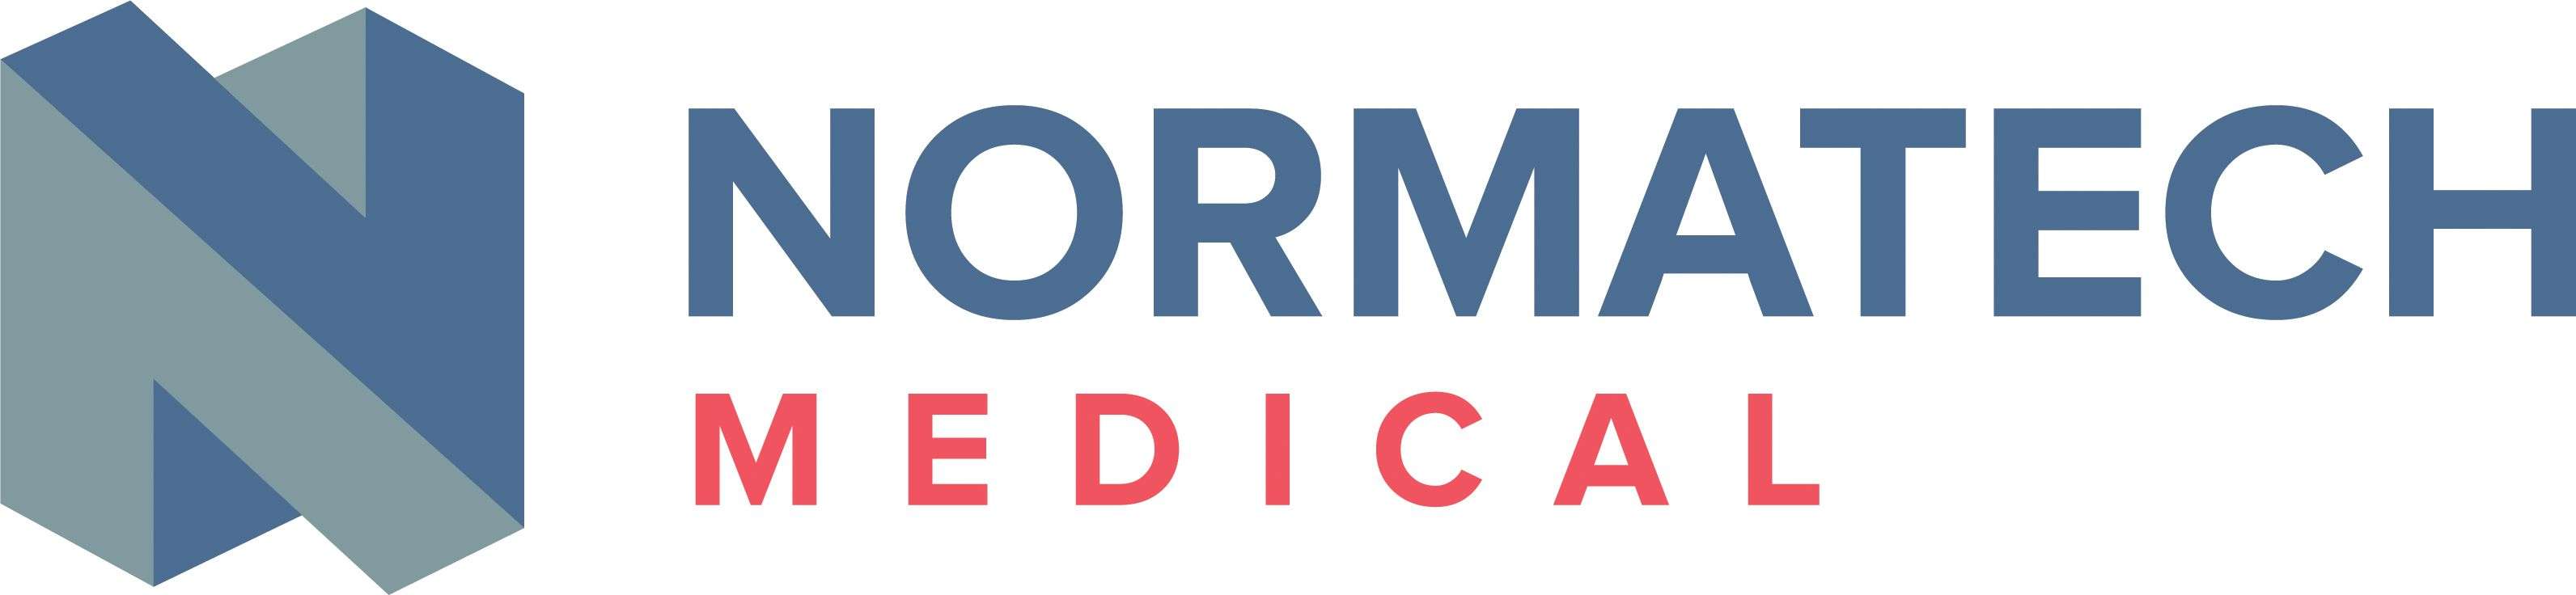 Normatech Médical